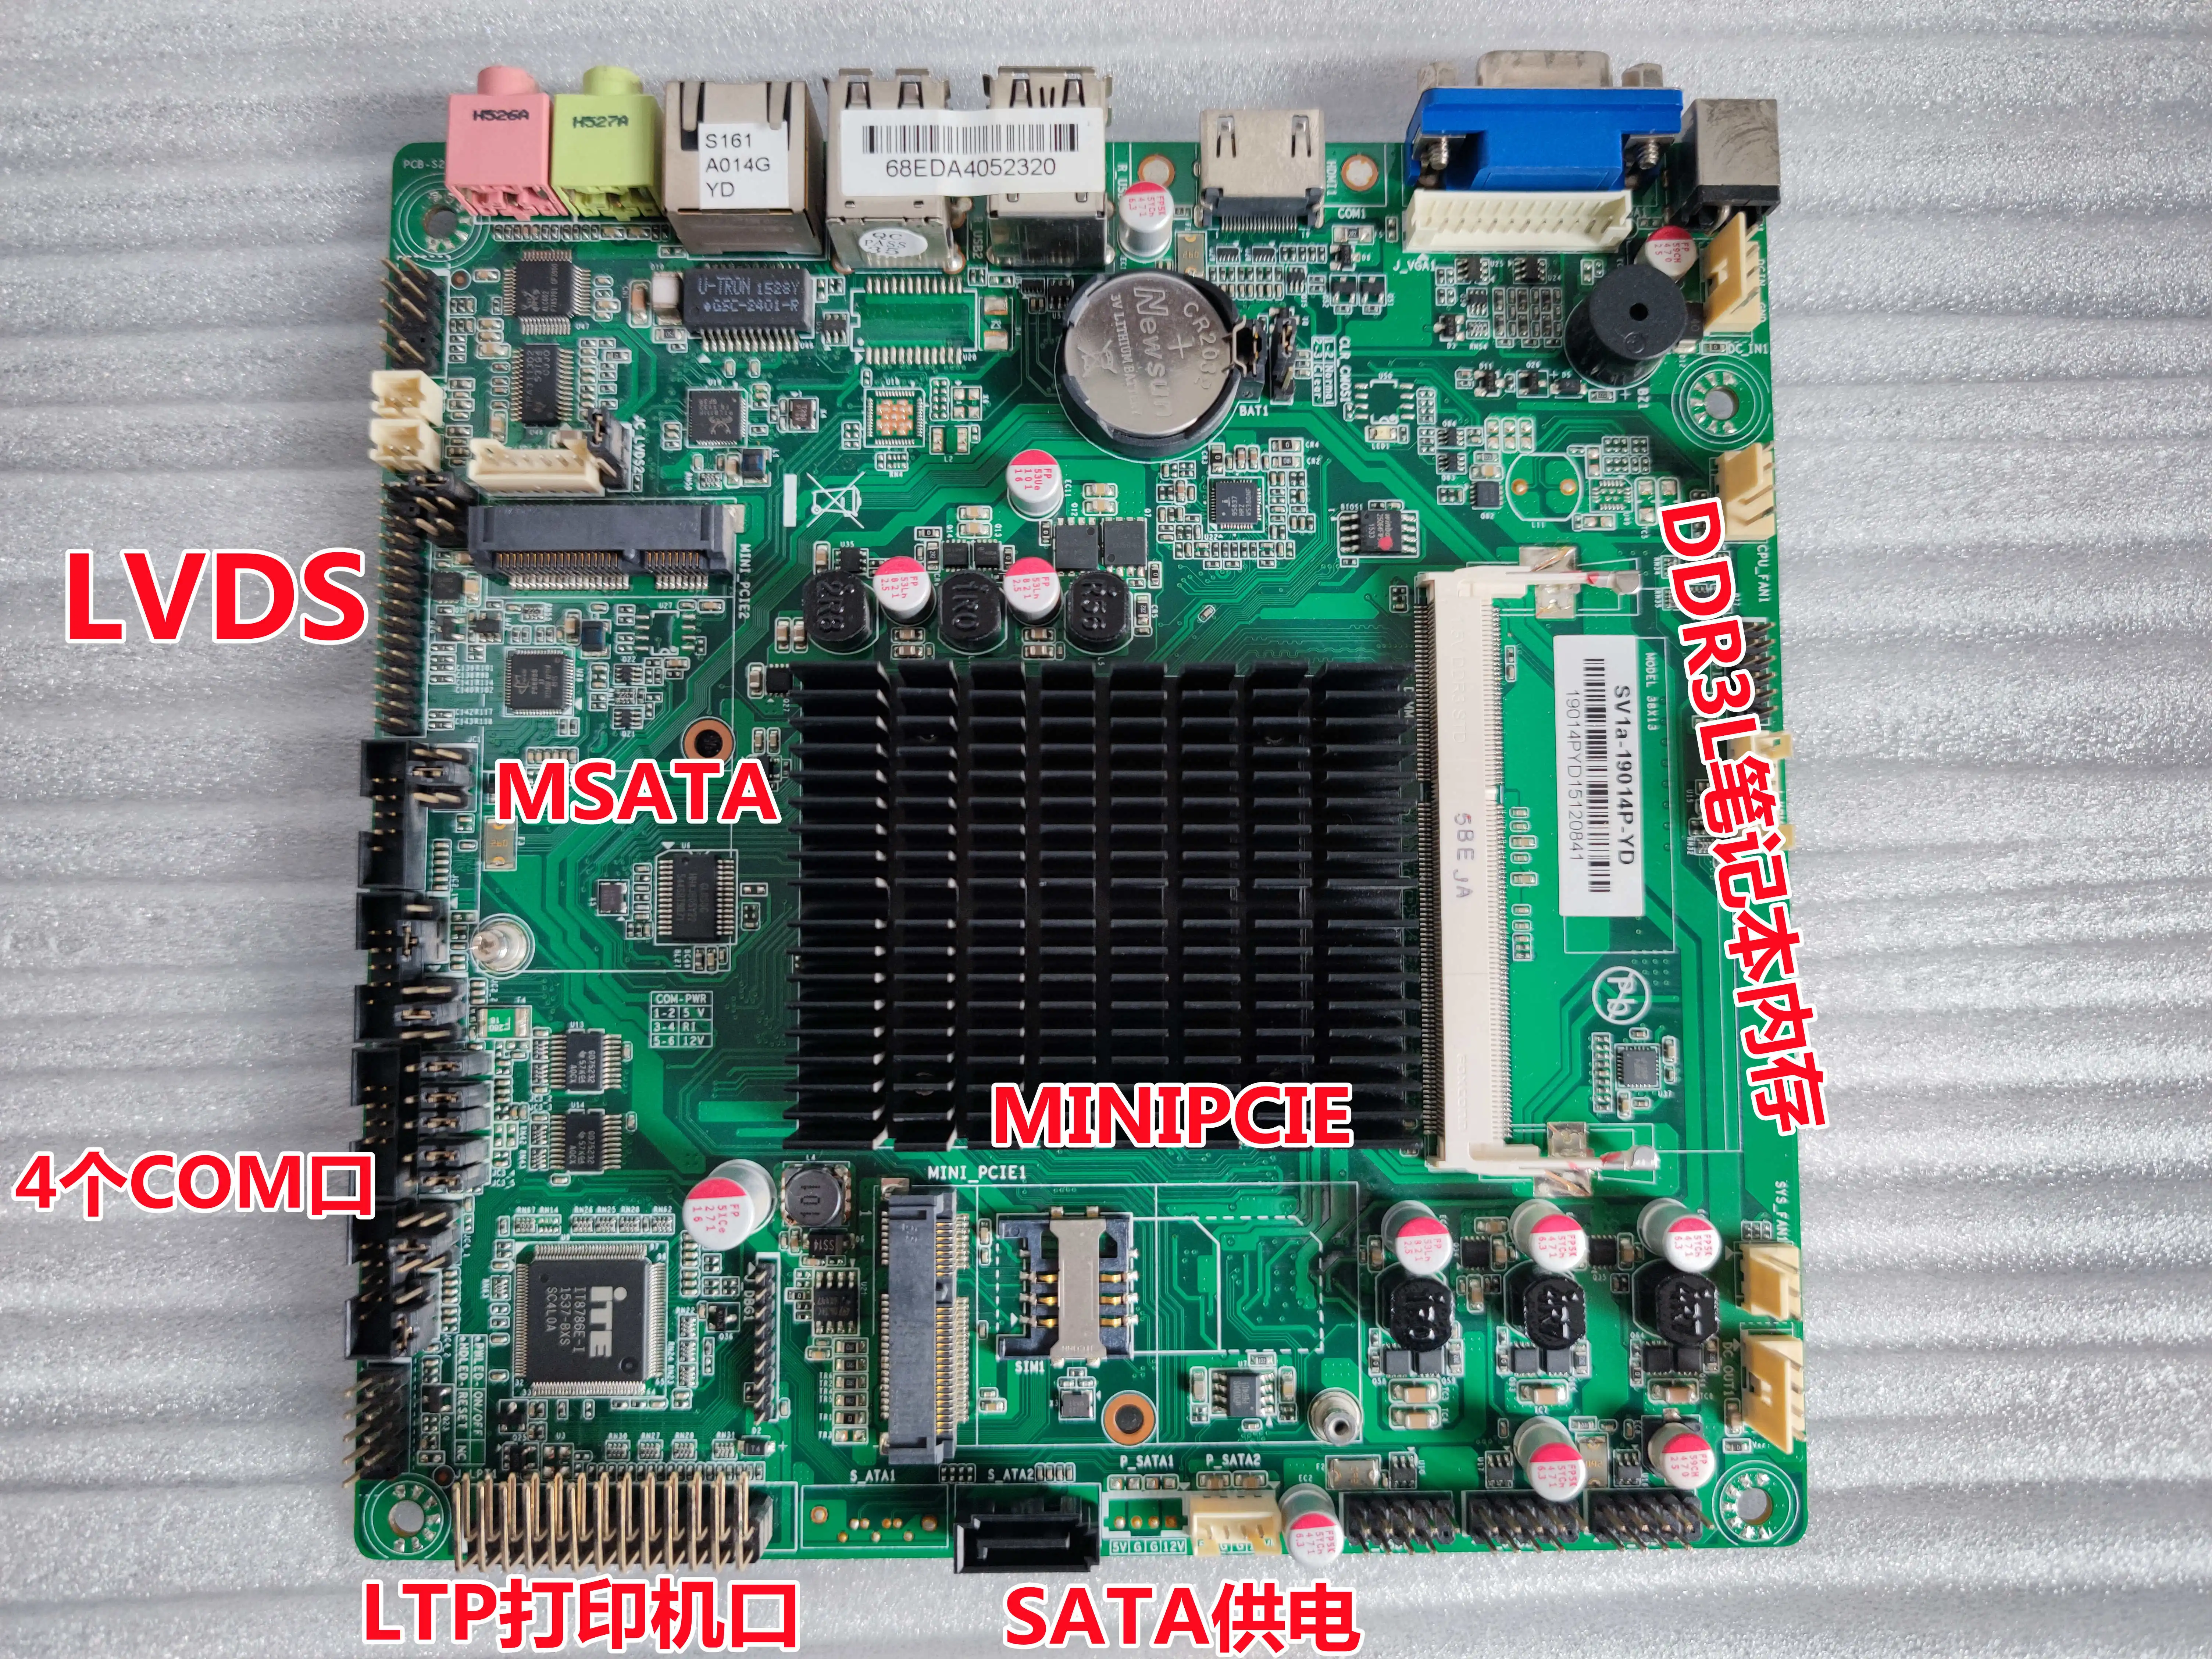 SV1a-19014P J1900 Четырехъядерный процессор 17X17 COM H-D-M-I Industrial Control ITX Кассовый аппарат L-V-D-S Материнская плата